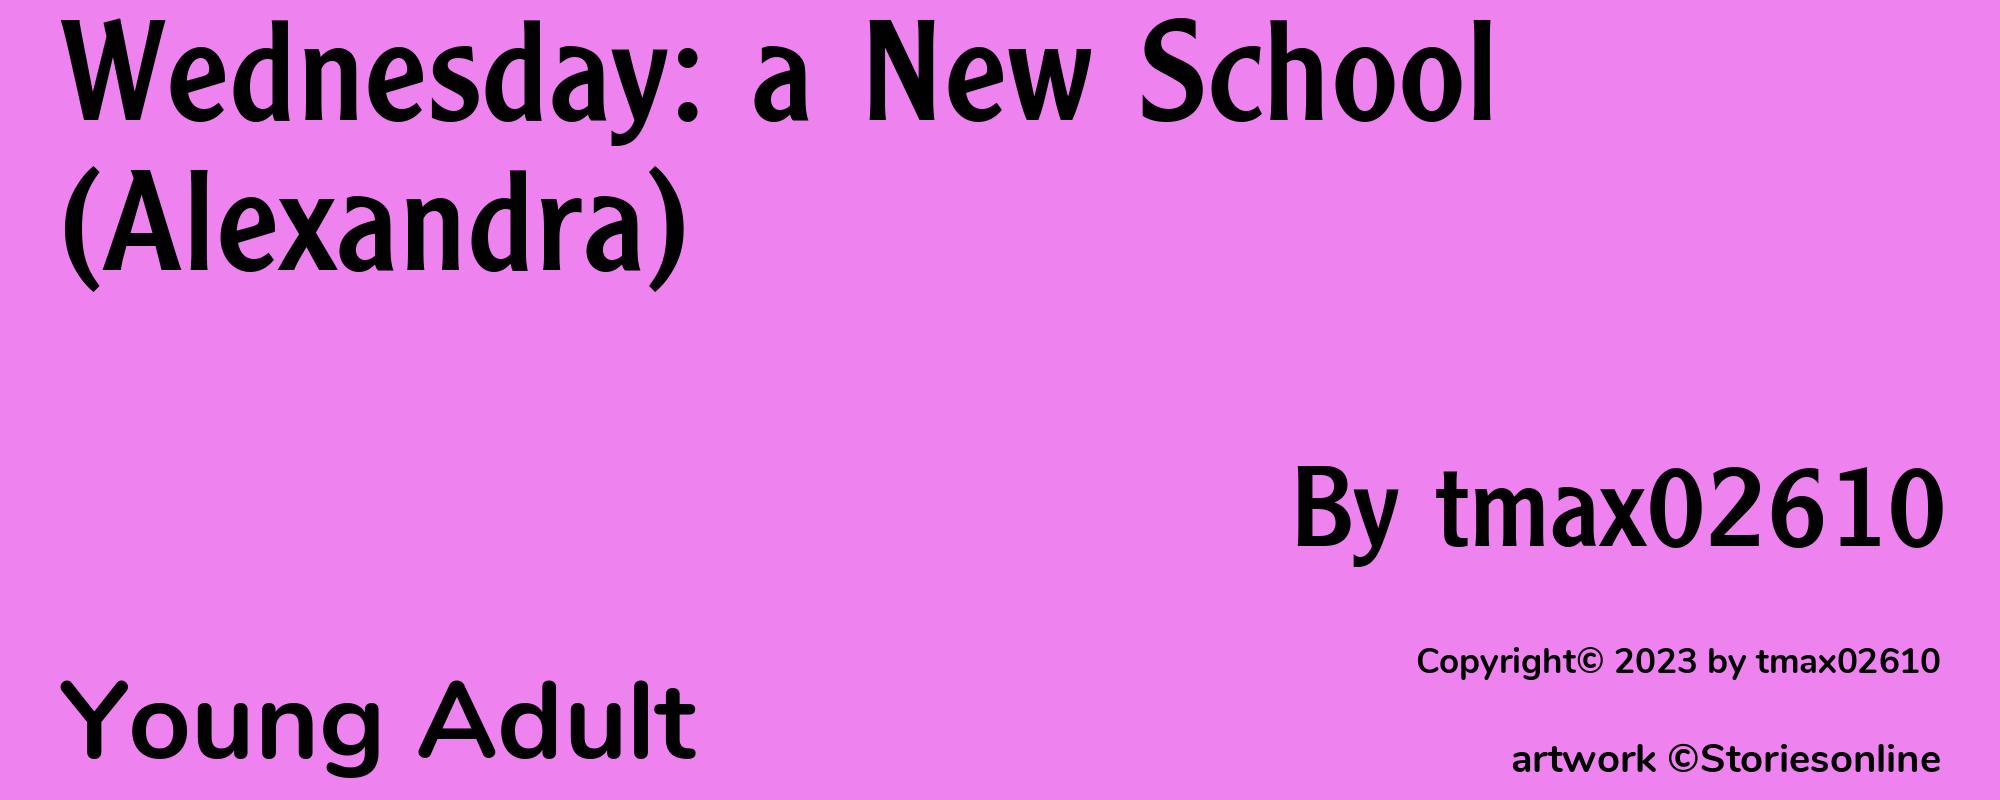 Wednesday: a New School (Alexandra) - Cover